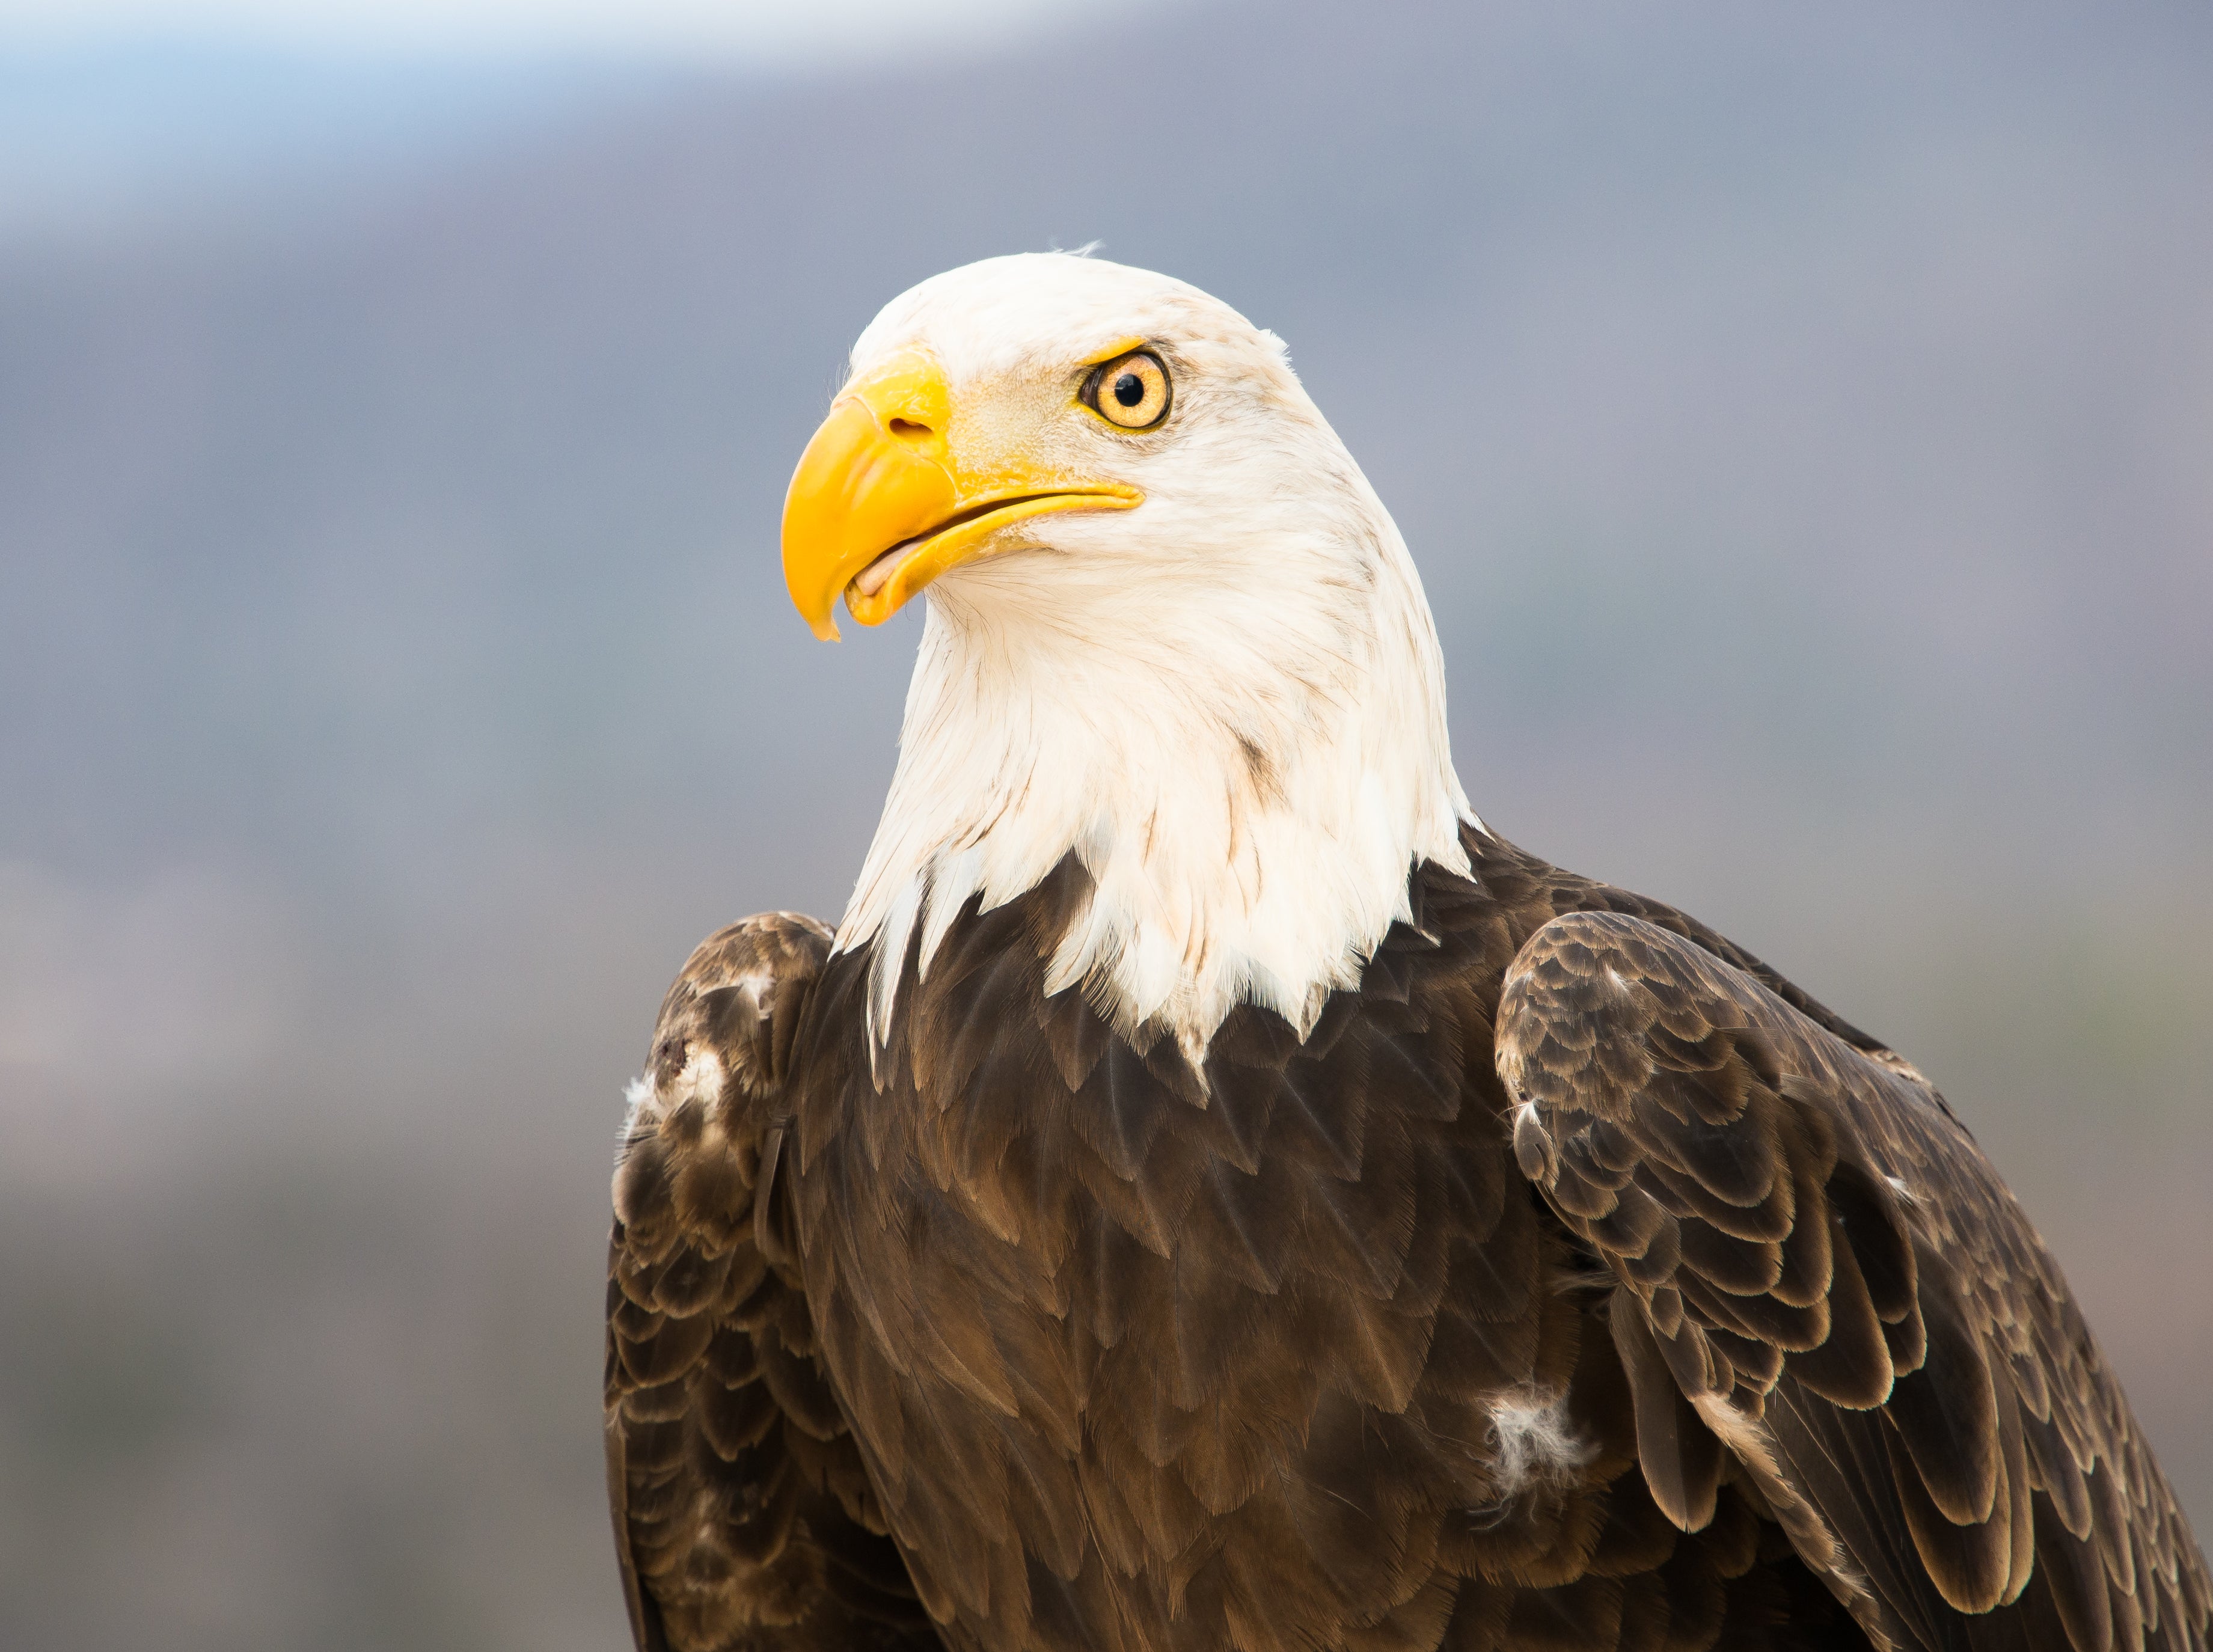 Bald Eagle photo by Drew Senter